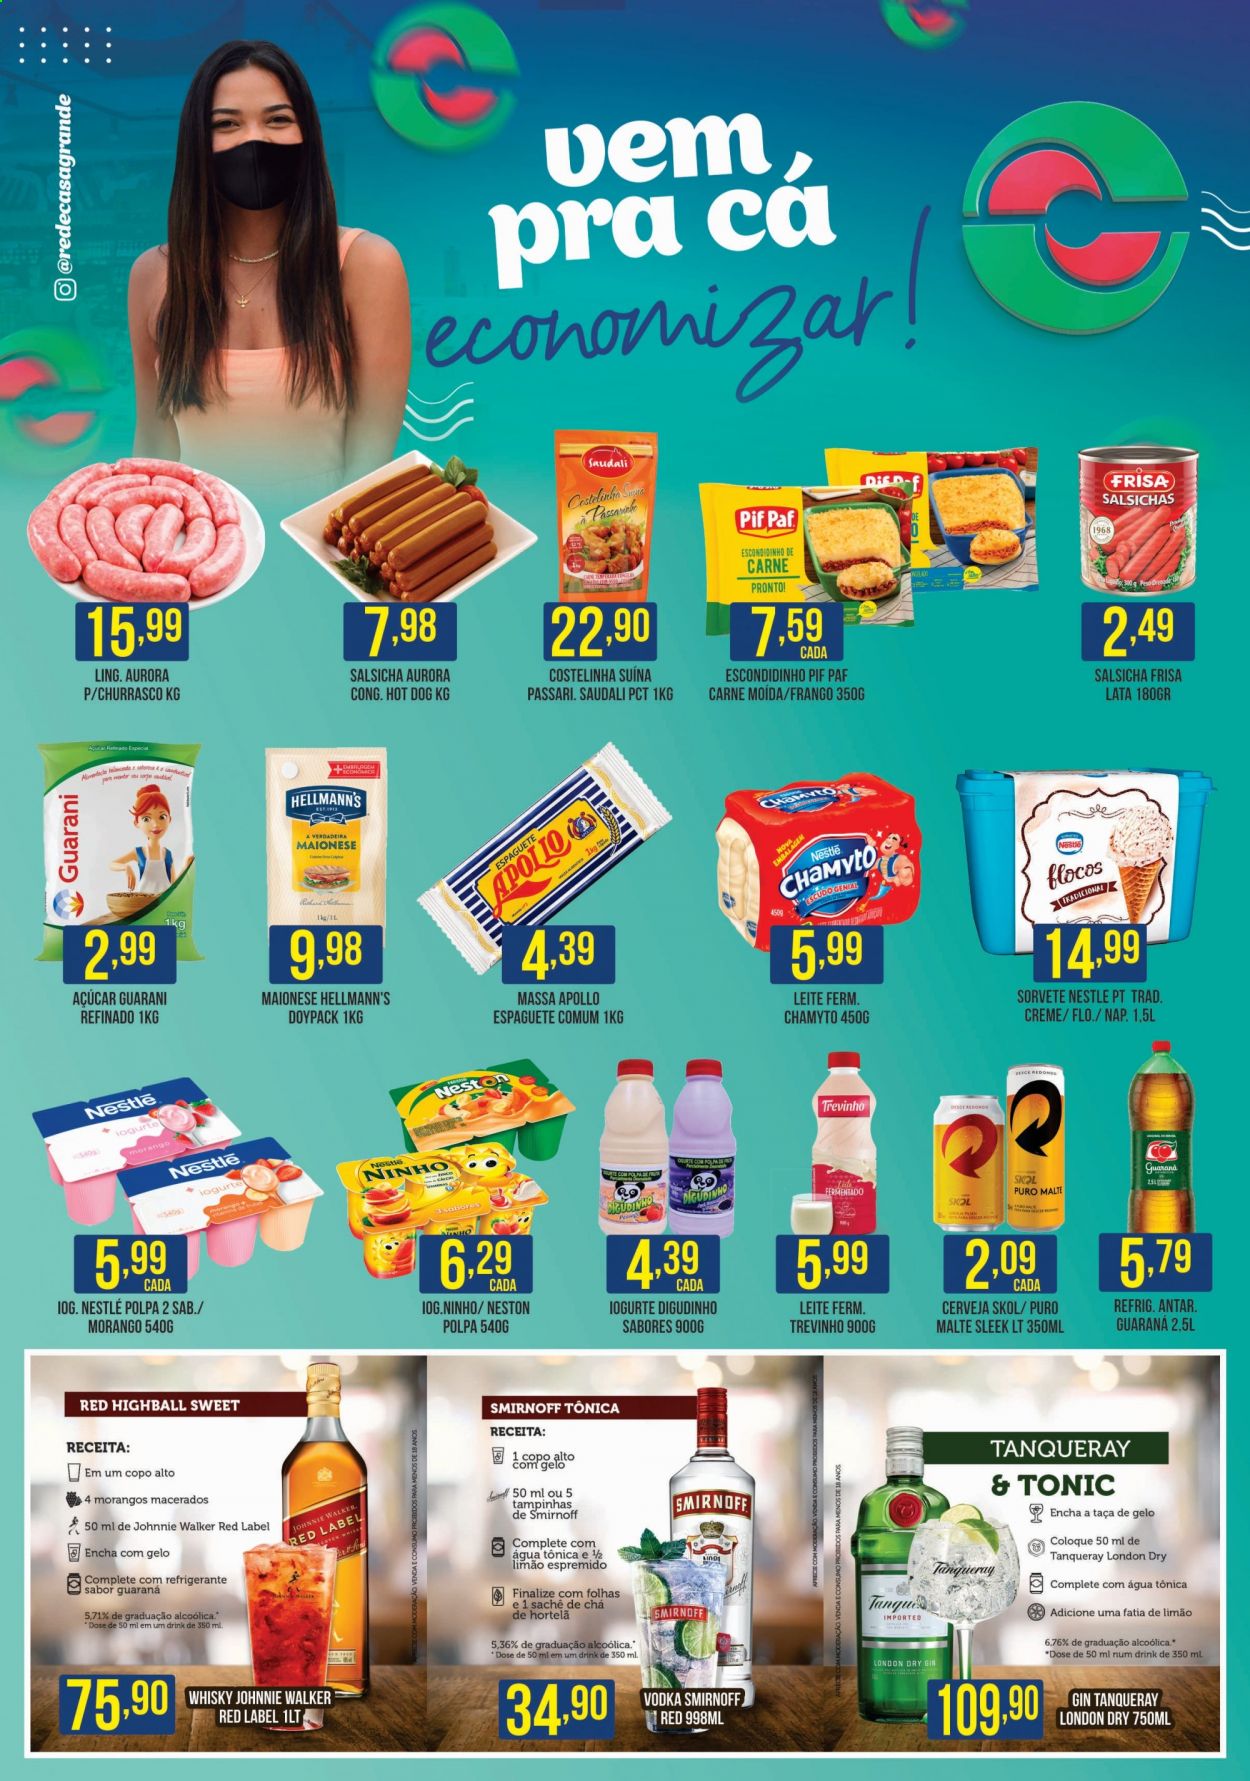 Encarte Casagrande Supermercados  - 24.05.2021 - 06.06.2021.